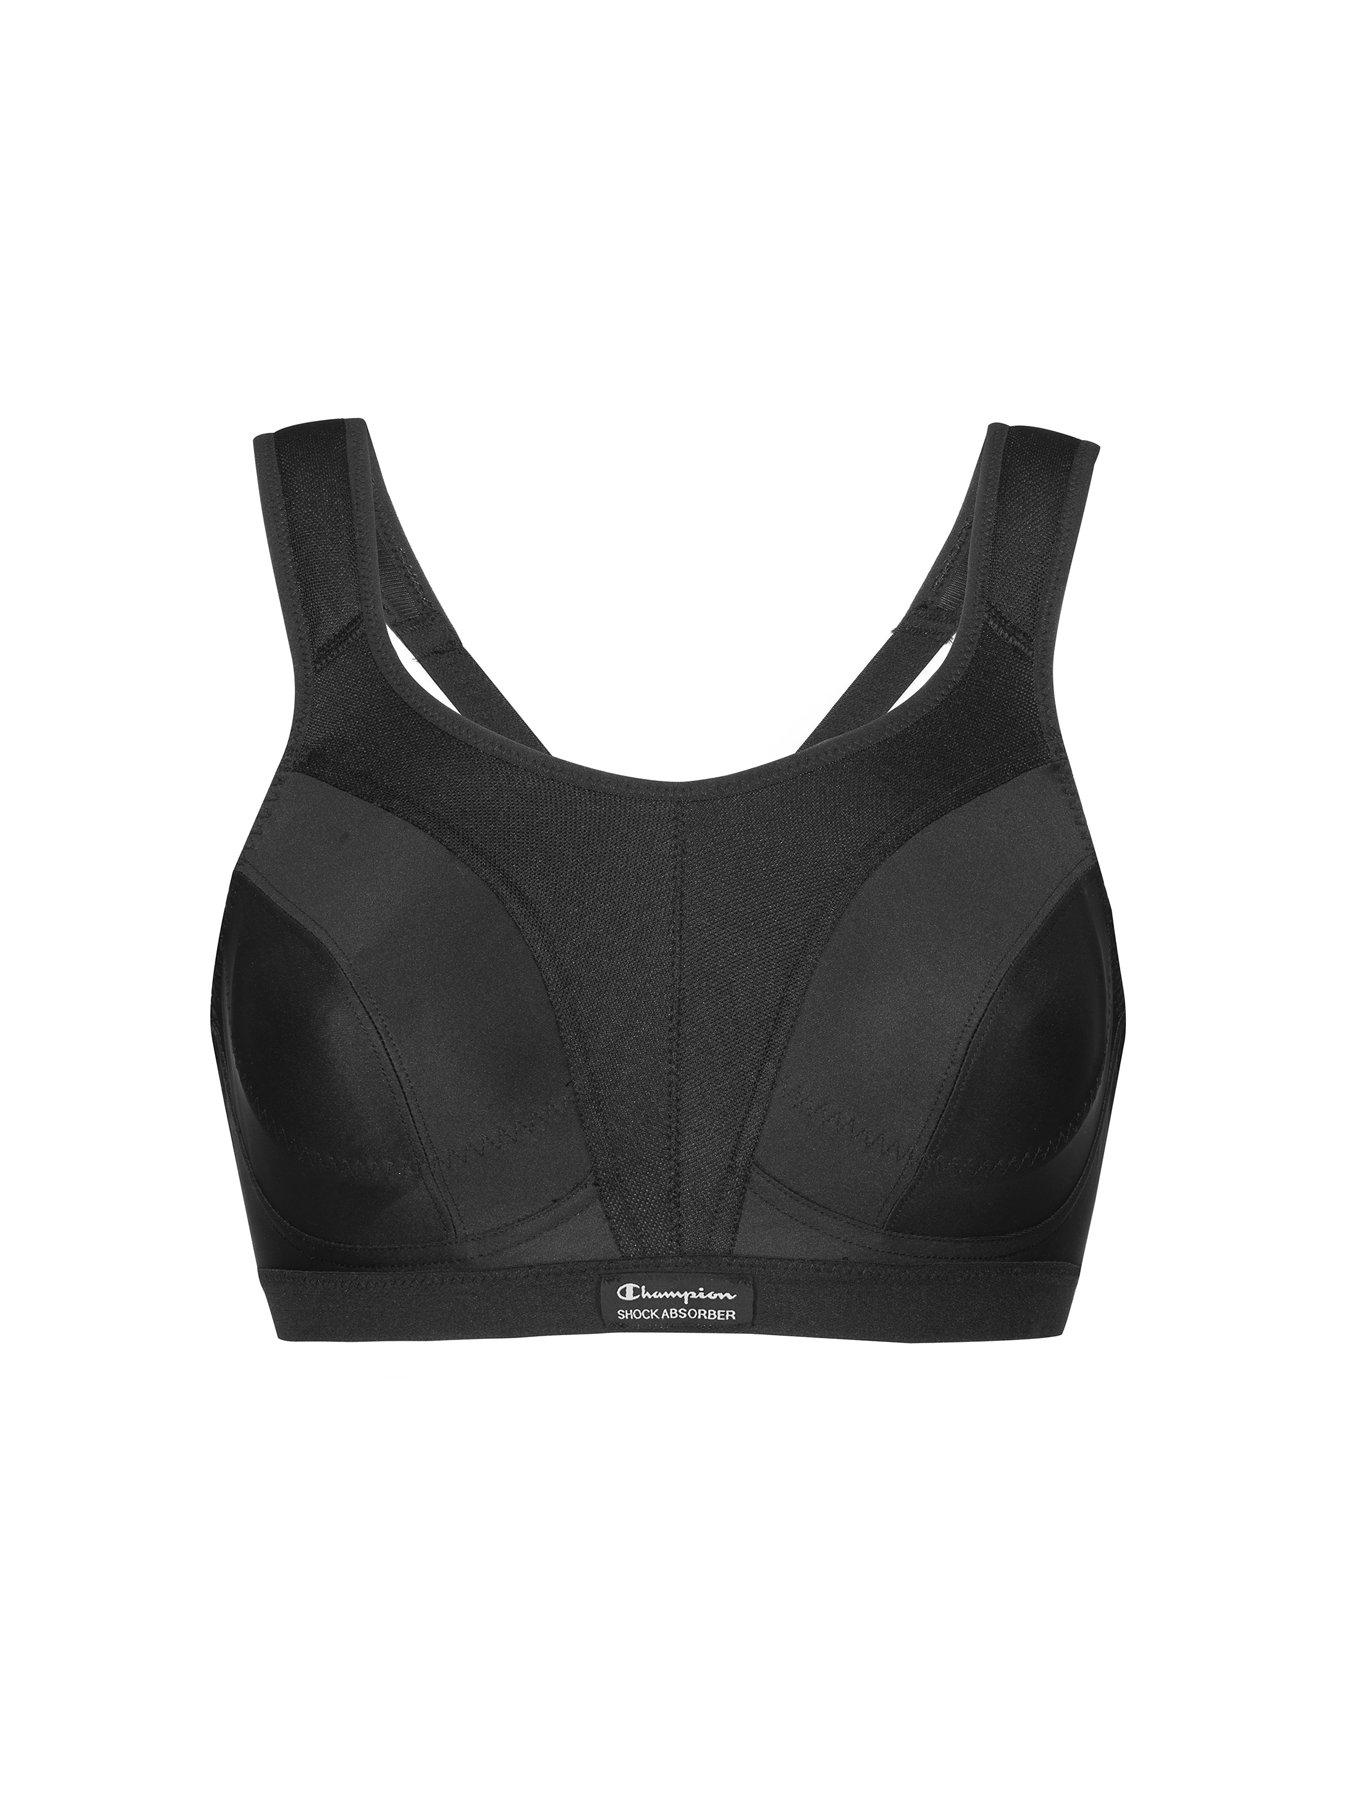 adidas Yoga Essentials Printed Sports Bra - Light Support - Black